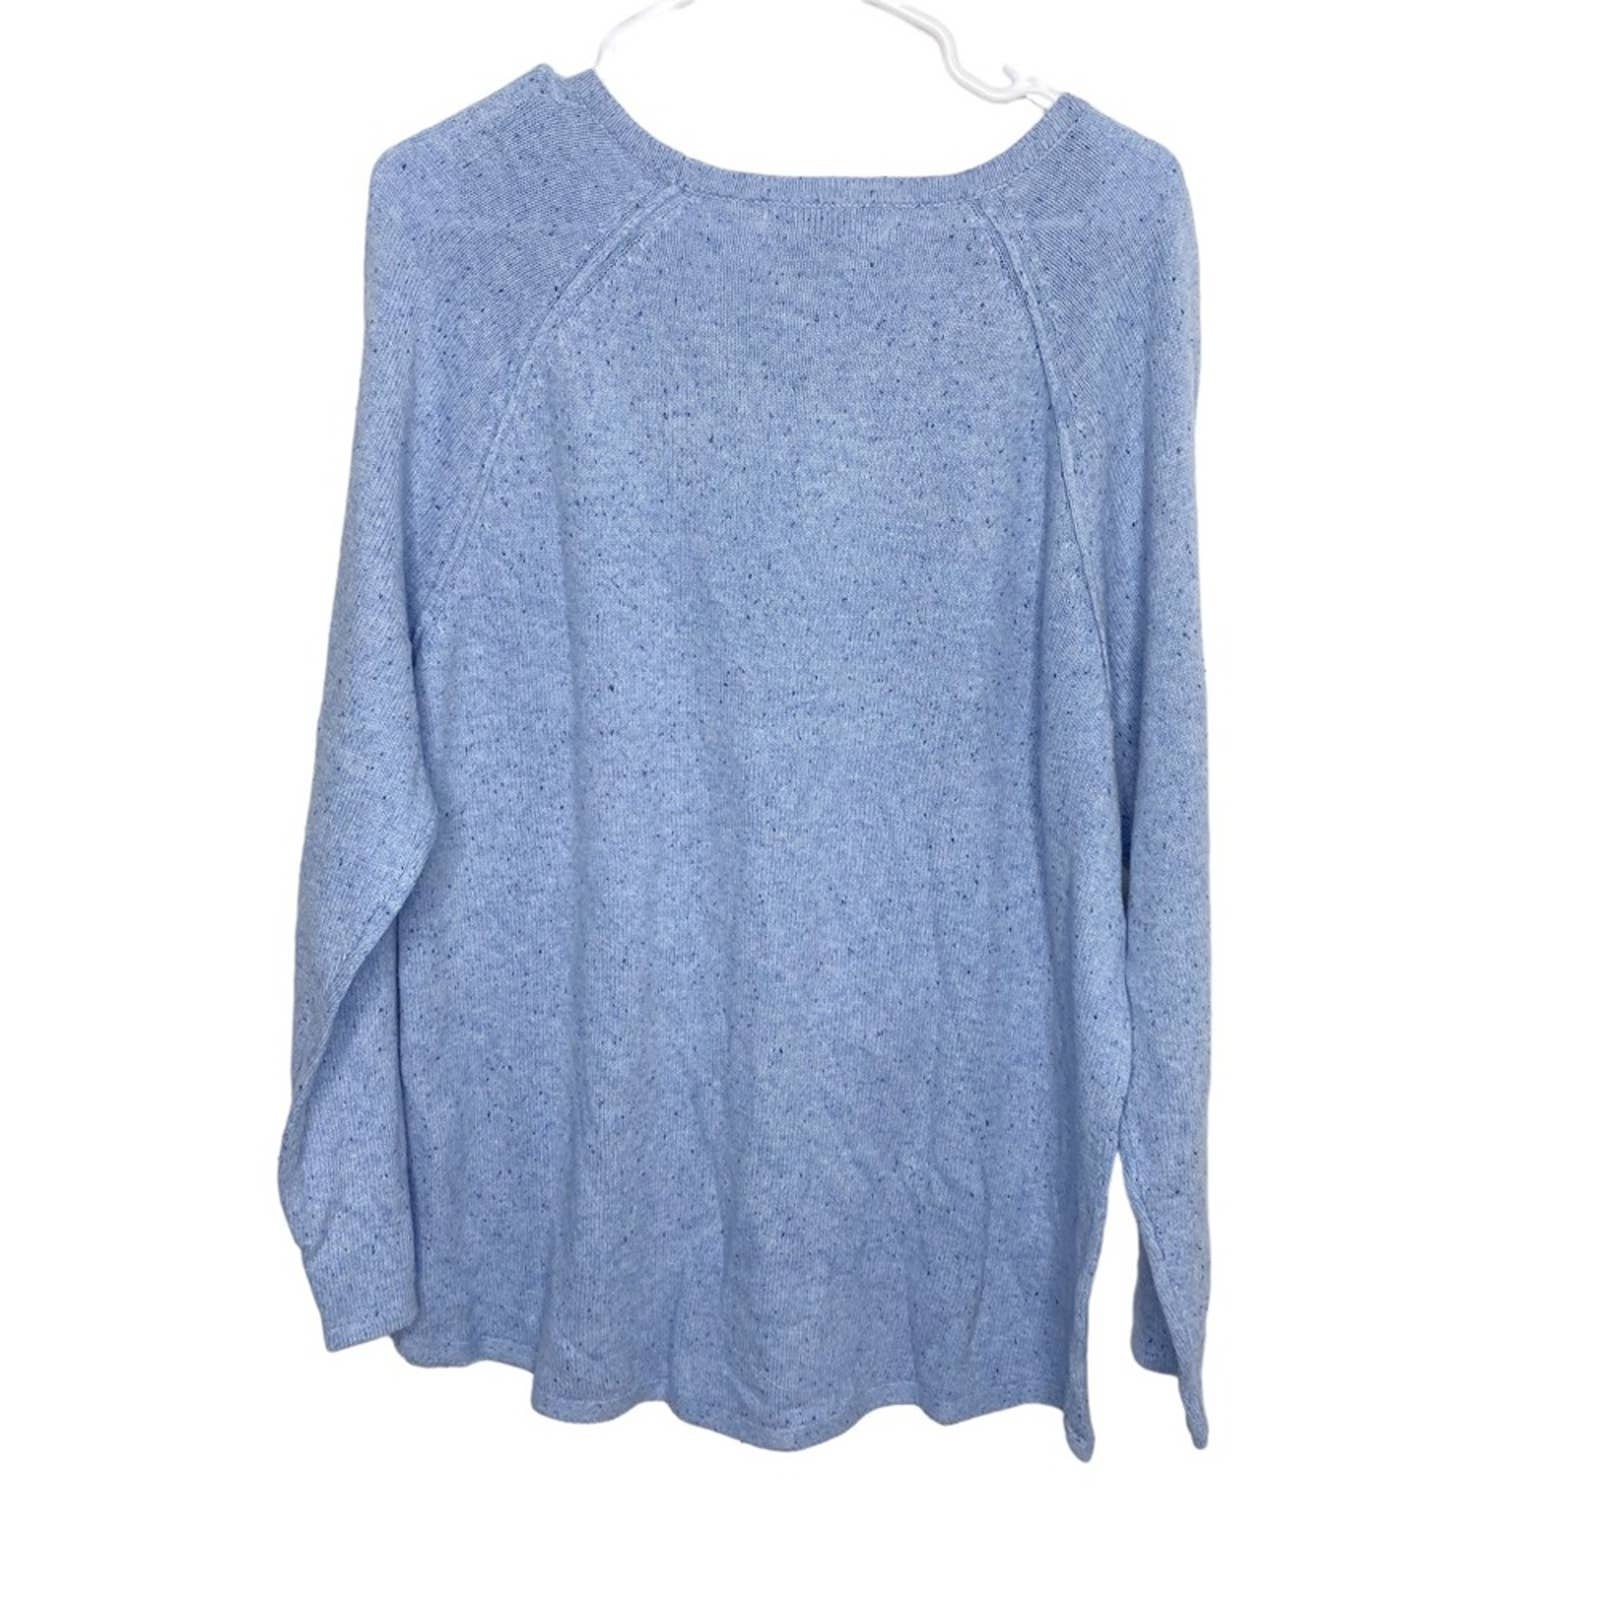 Elegant Karen Scott blue heather sweater size 0X NWT fPhQWJv7a High Quaity